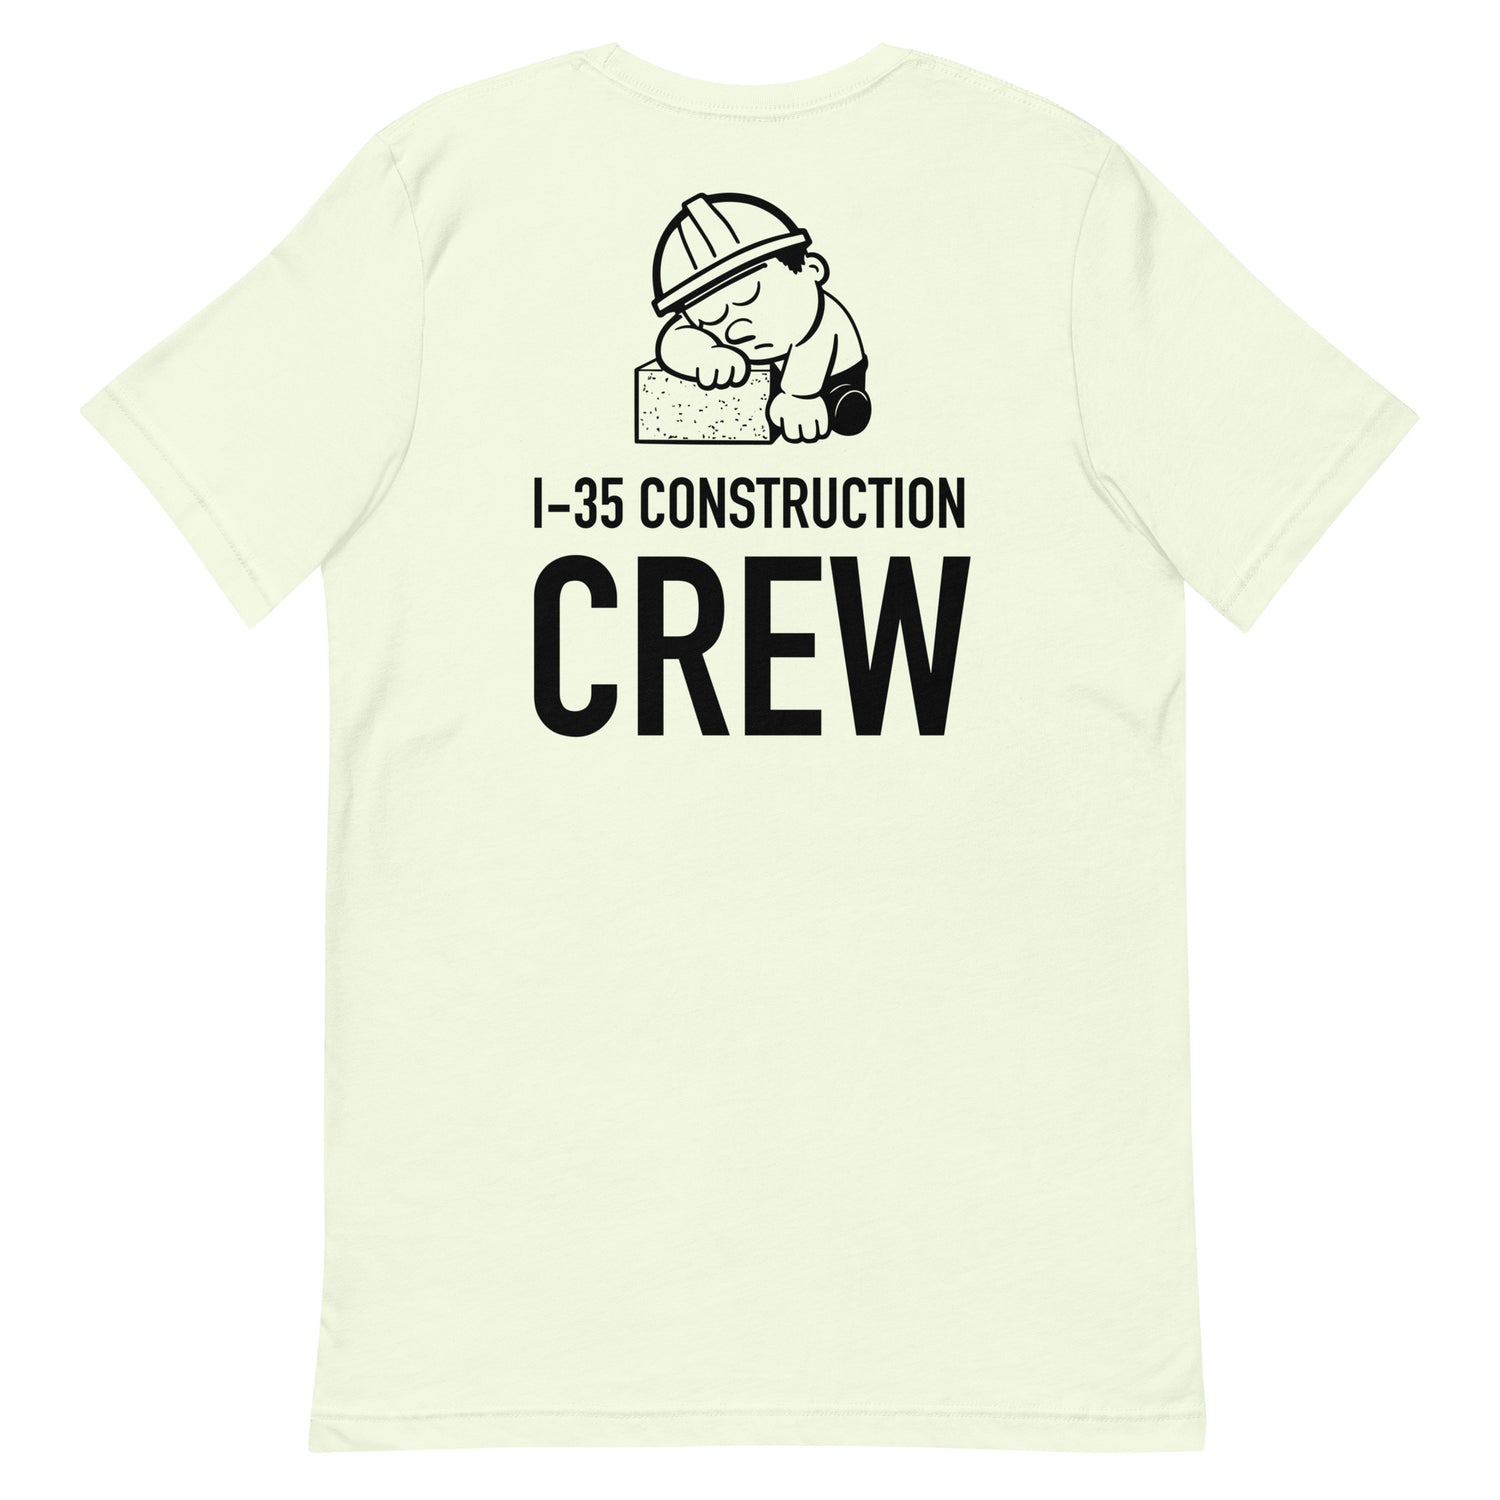 I-35 Construction Crew T-Shirt